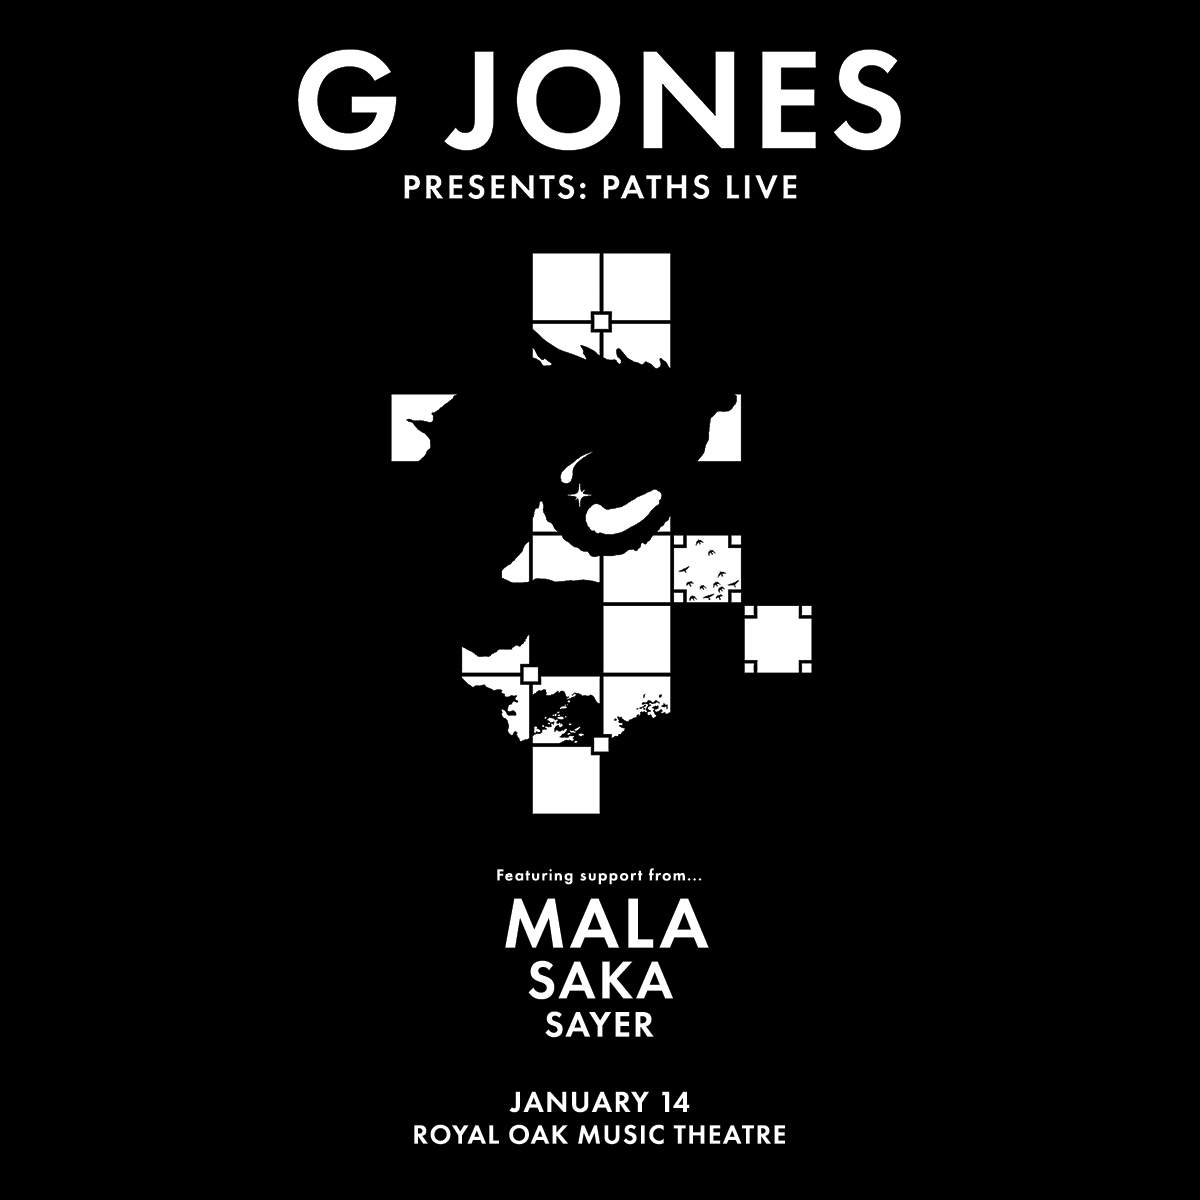 G Jones with Mala, Saka, Sayer - フライヤー表